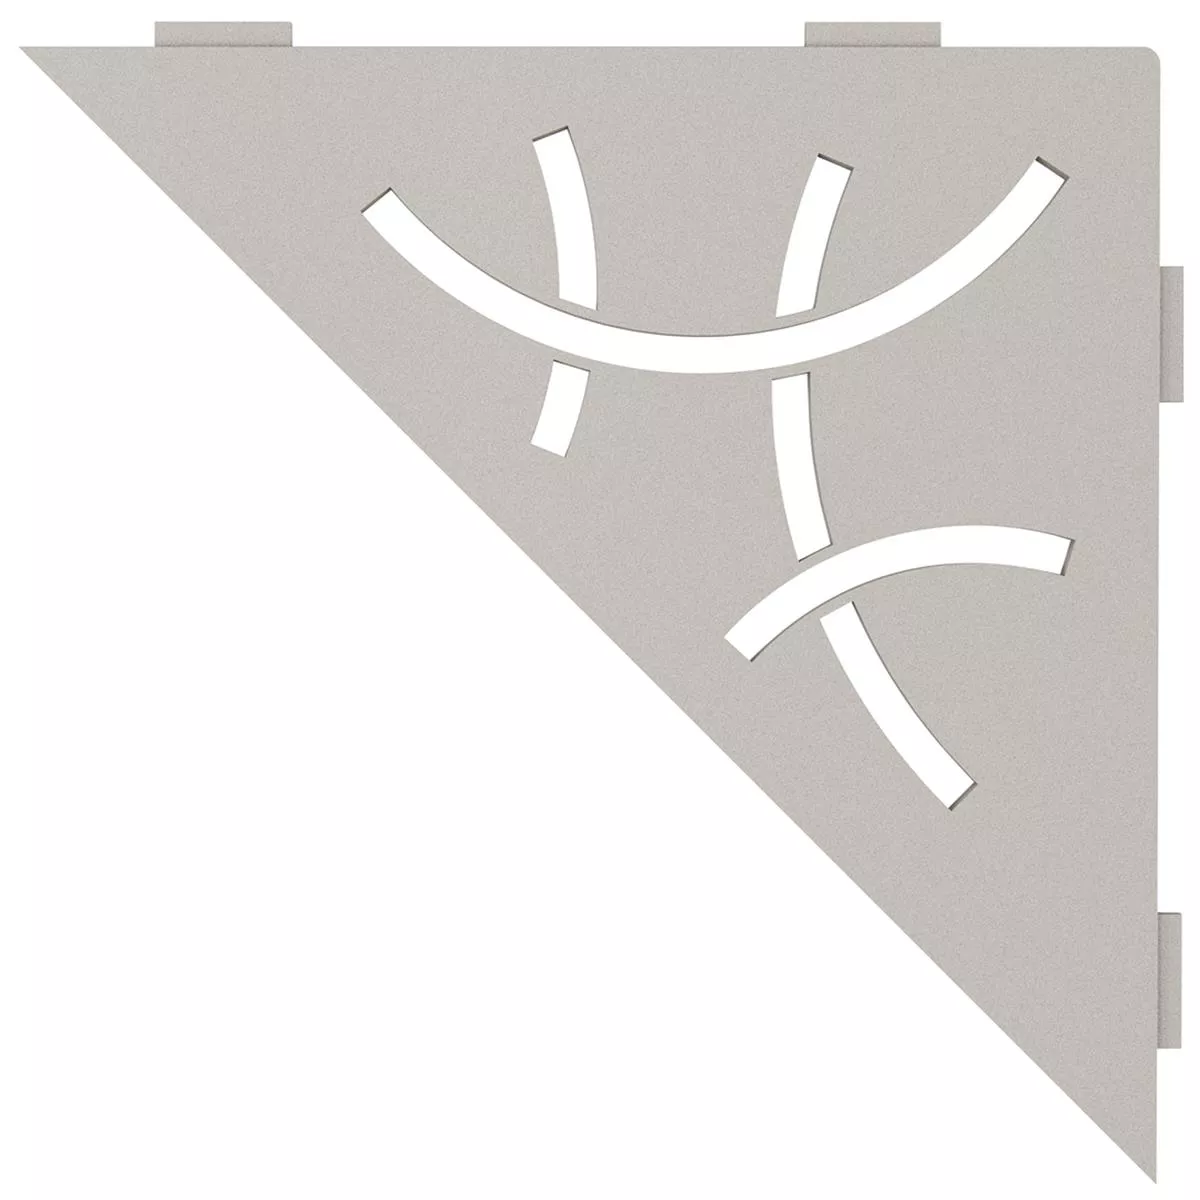 Schlüter vägghylla triangel 21x21cm kurva beige grå